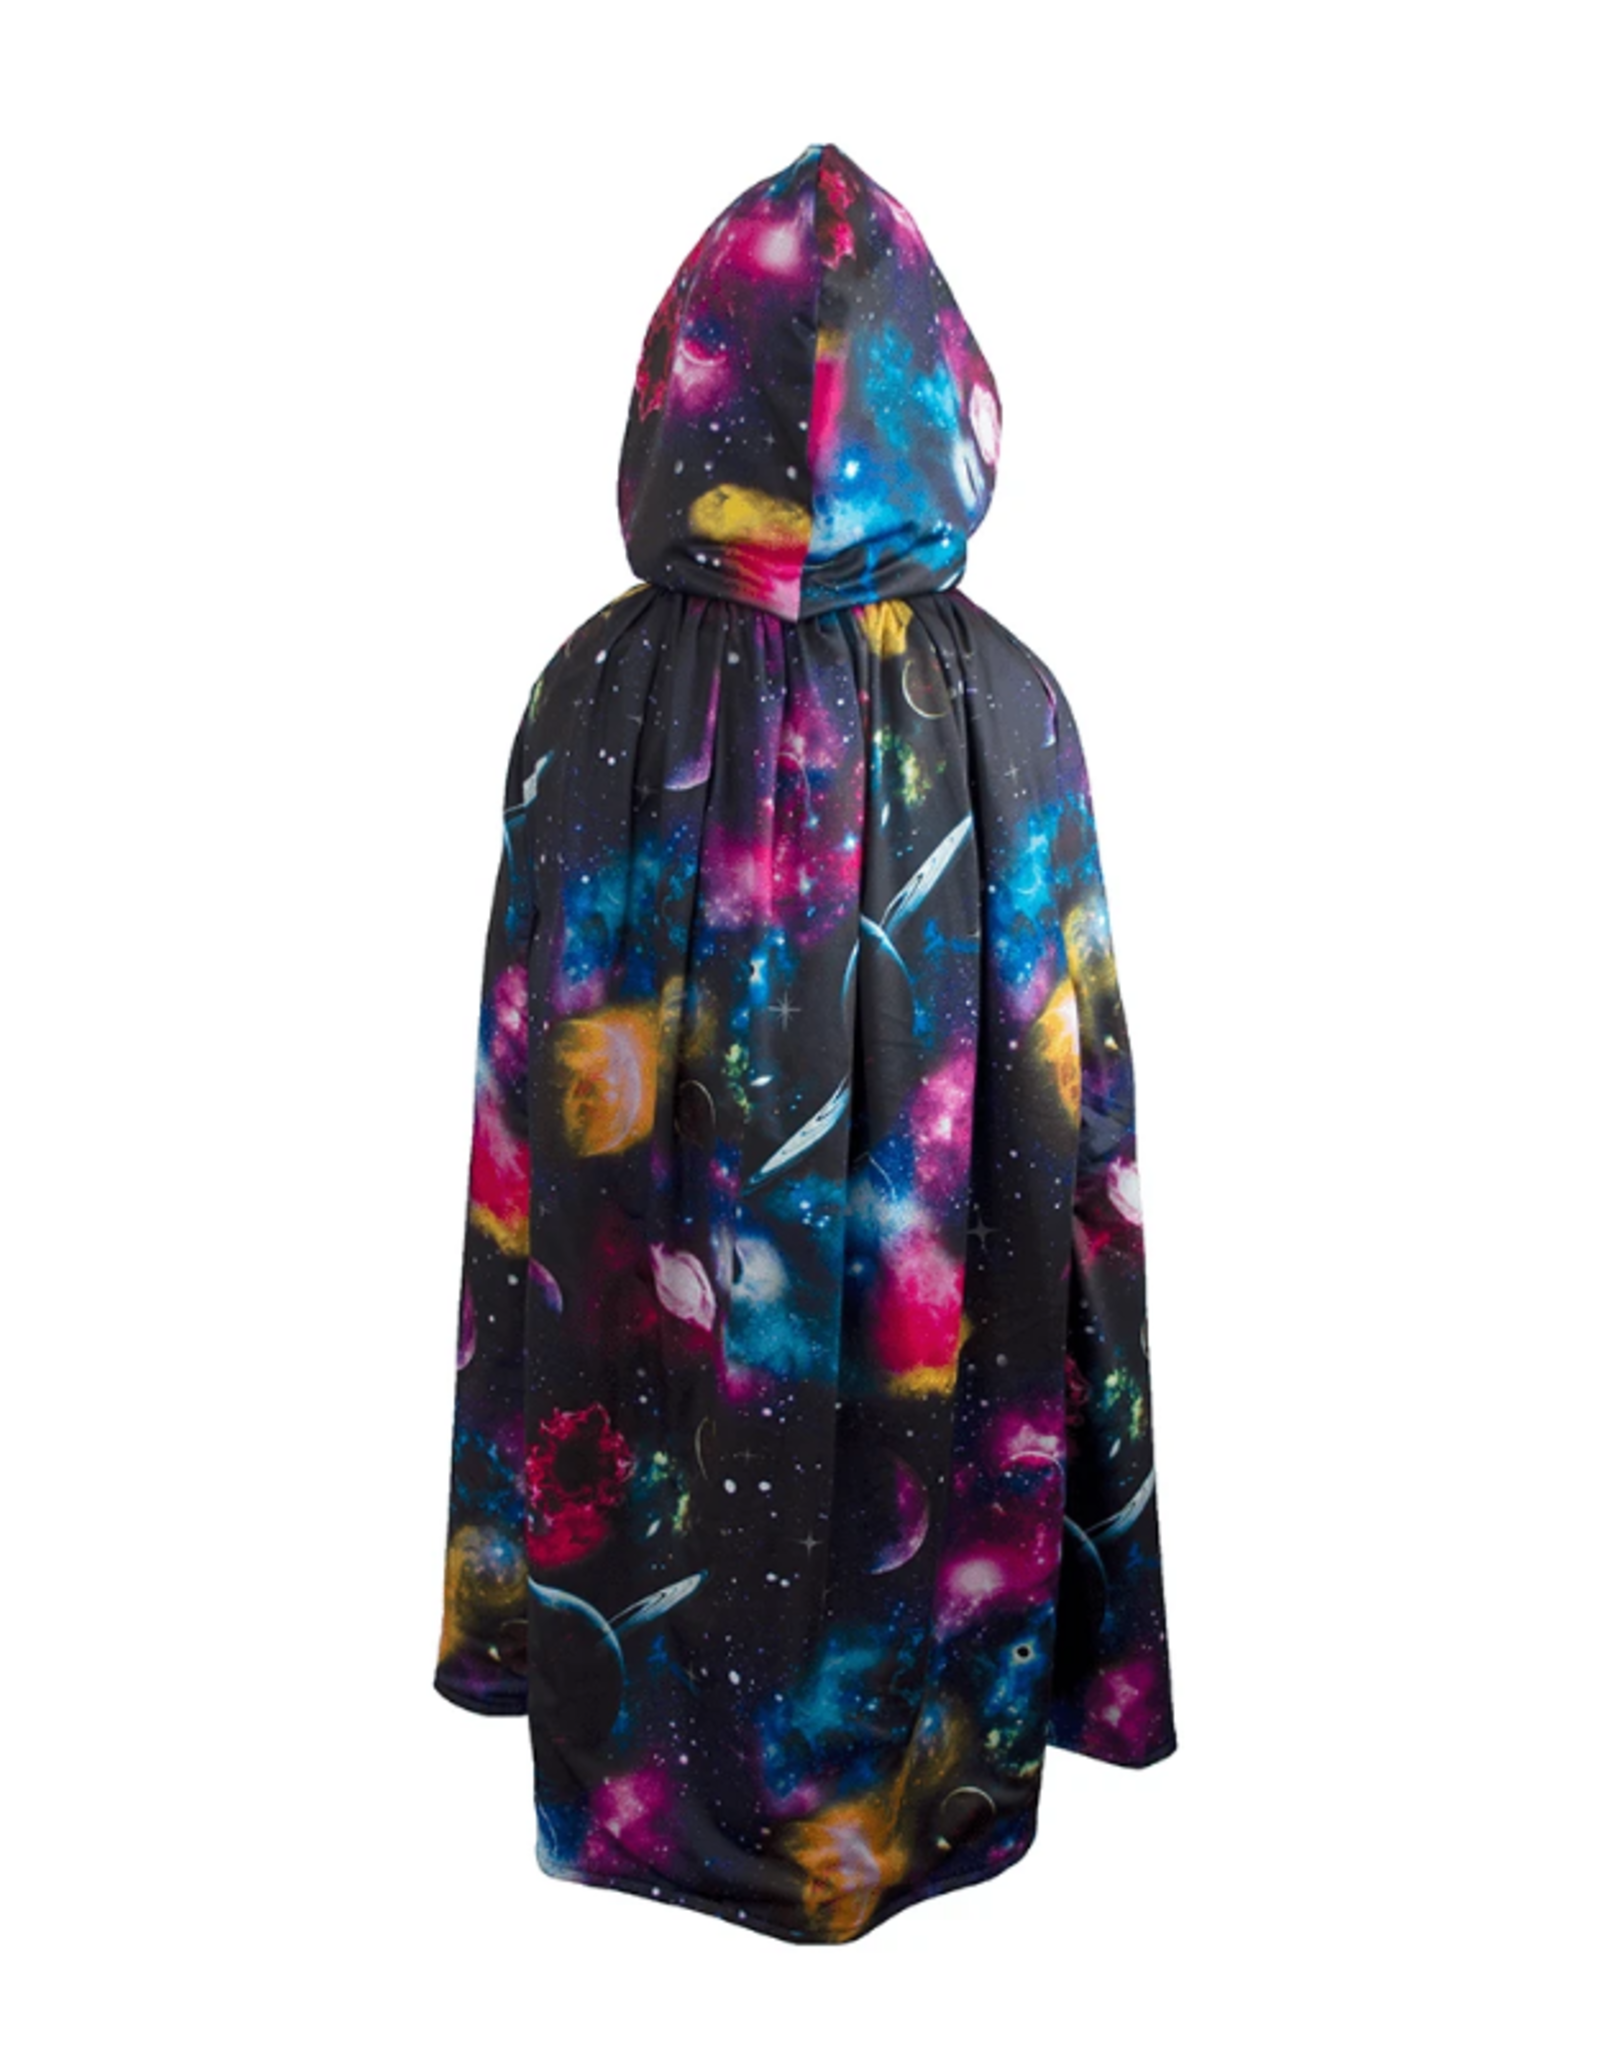 Creative Education Galaxy Cloak, Multi, Size 5-6